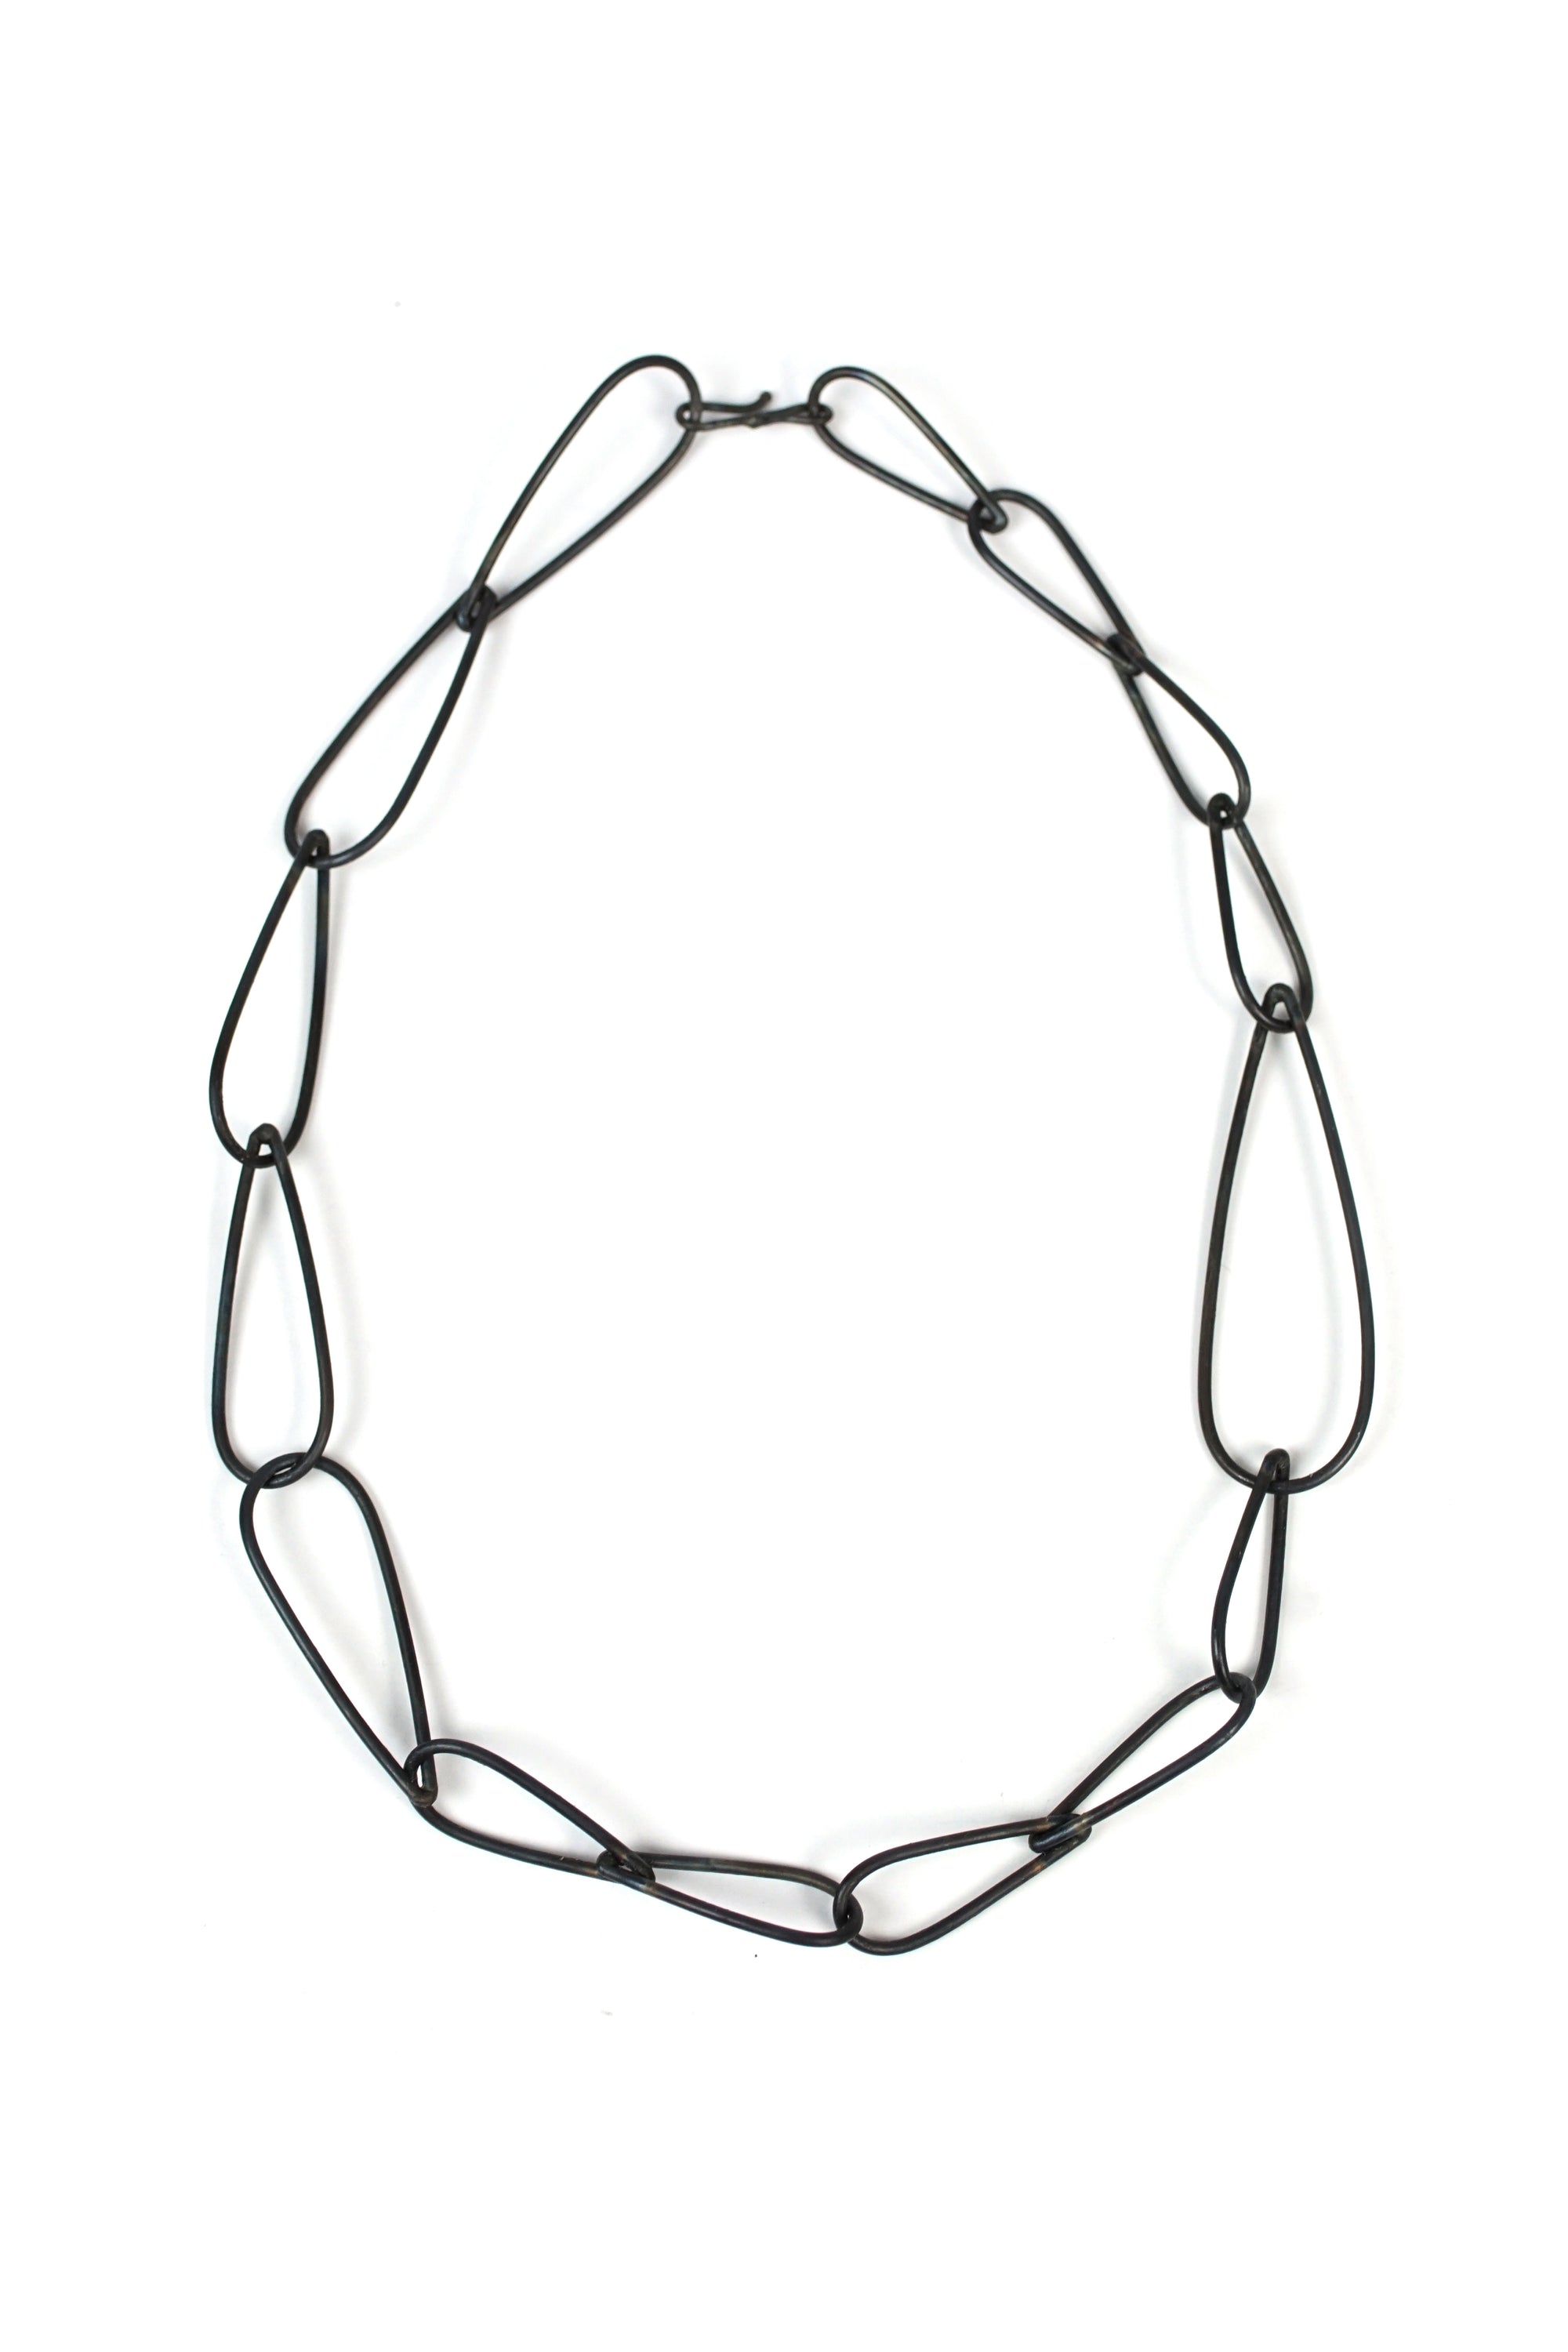 Midi Modular Necklace No. 2 in steel